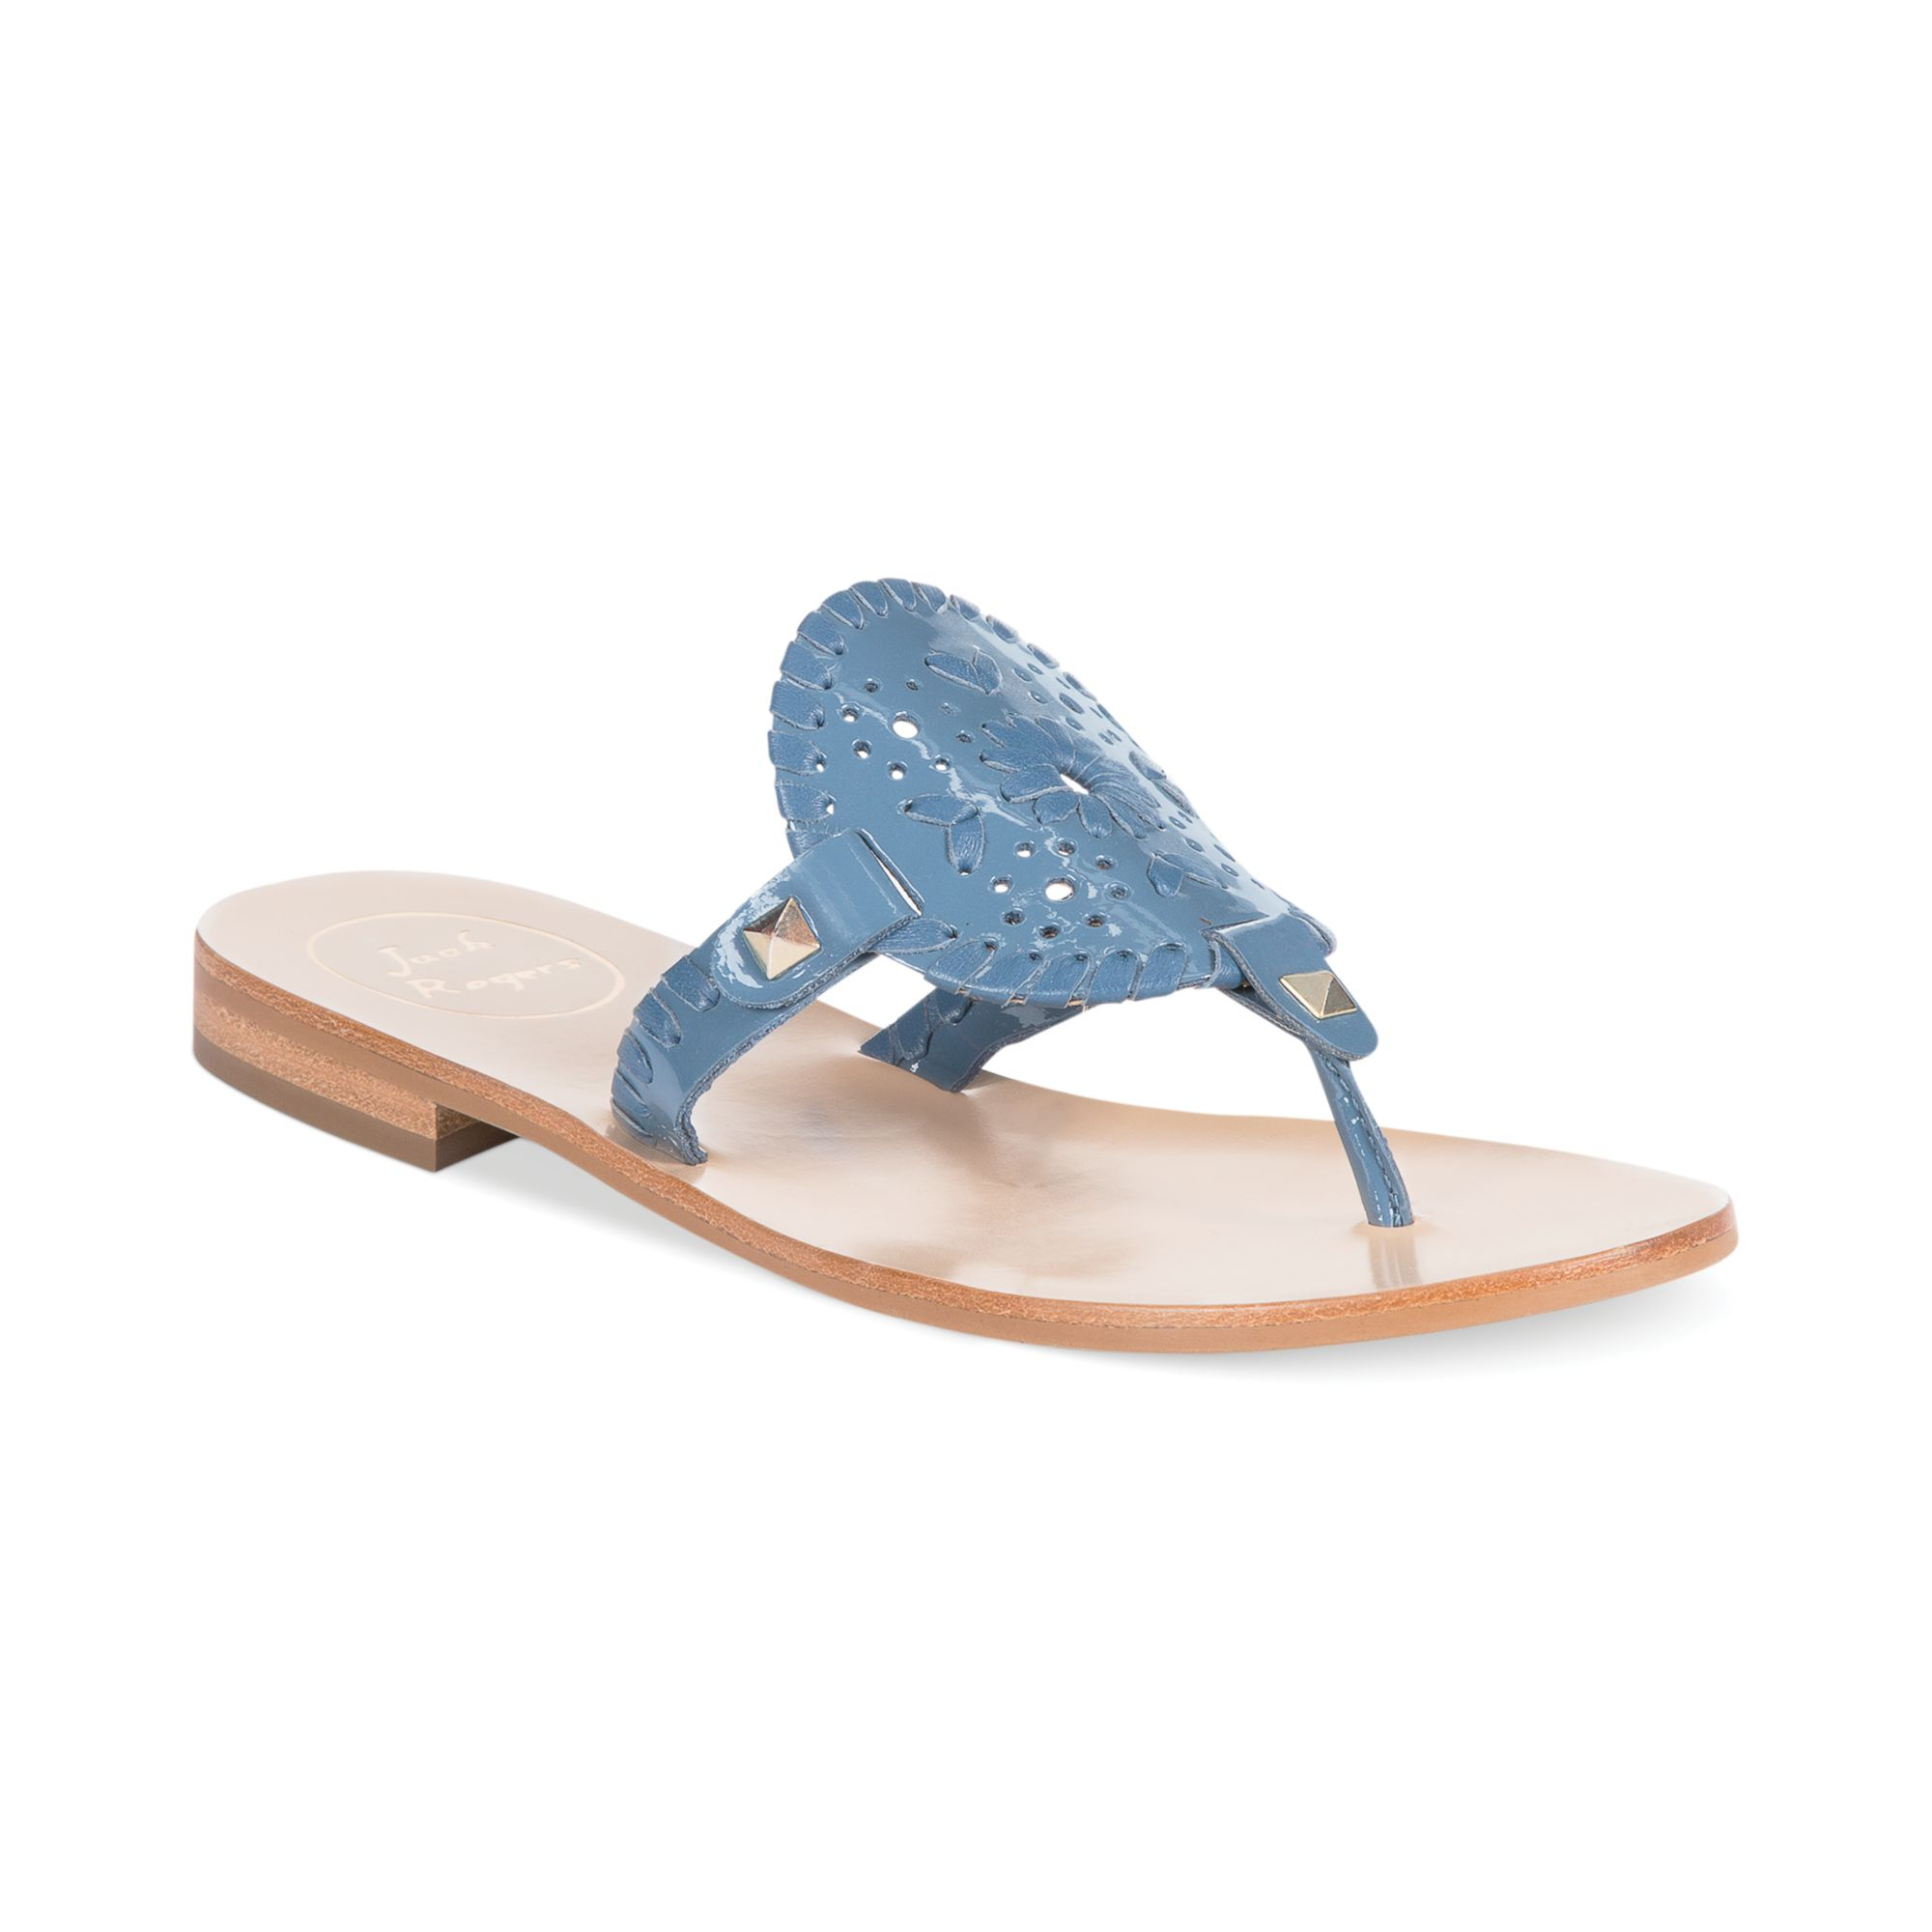 Lyst - Jack Rogers Georgica Flat Thong Sandals in Blue